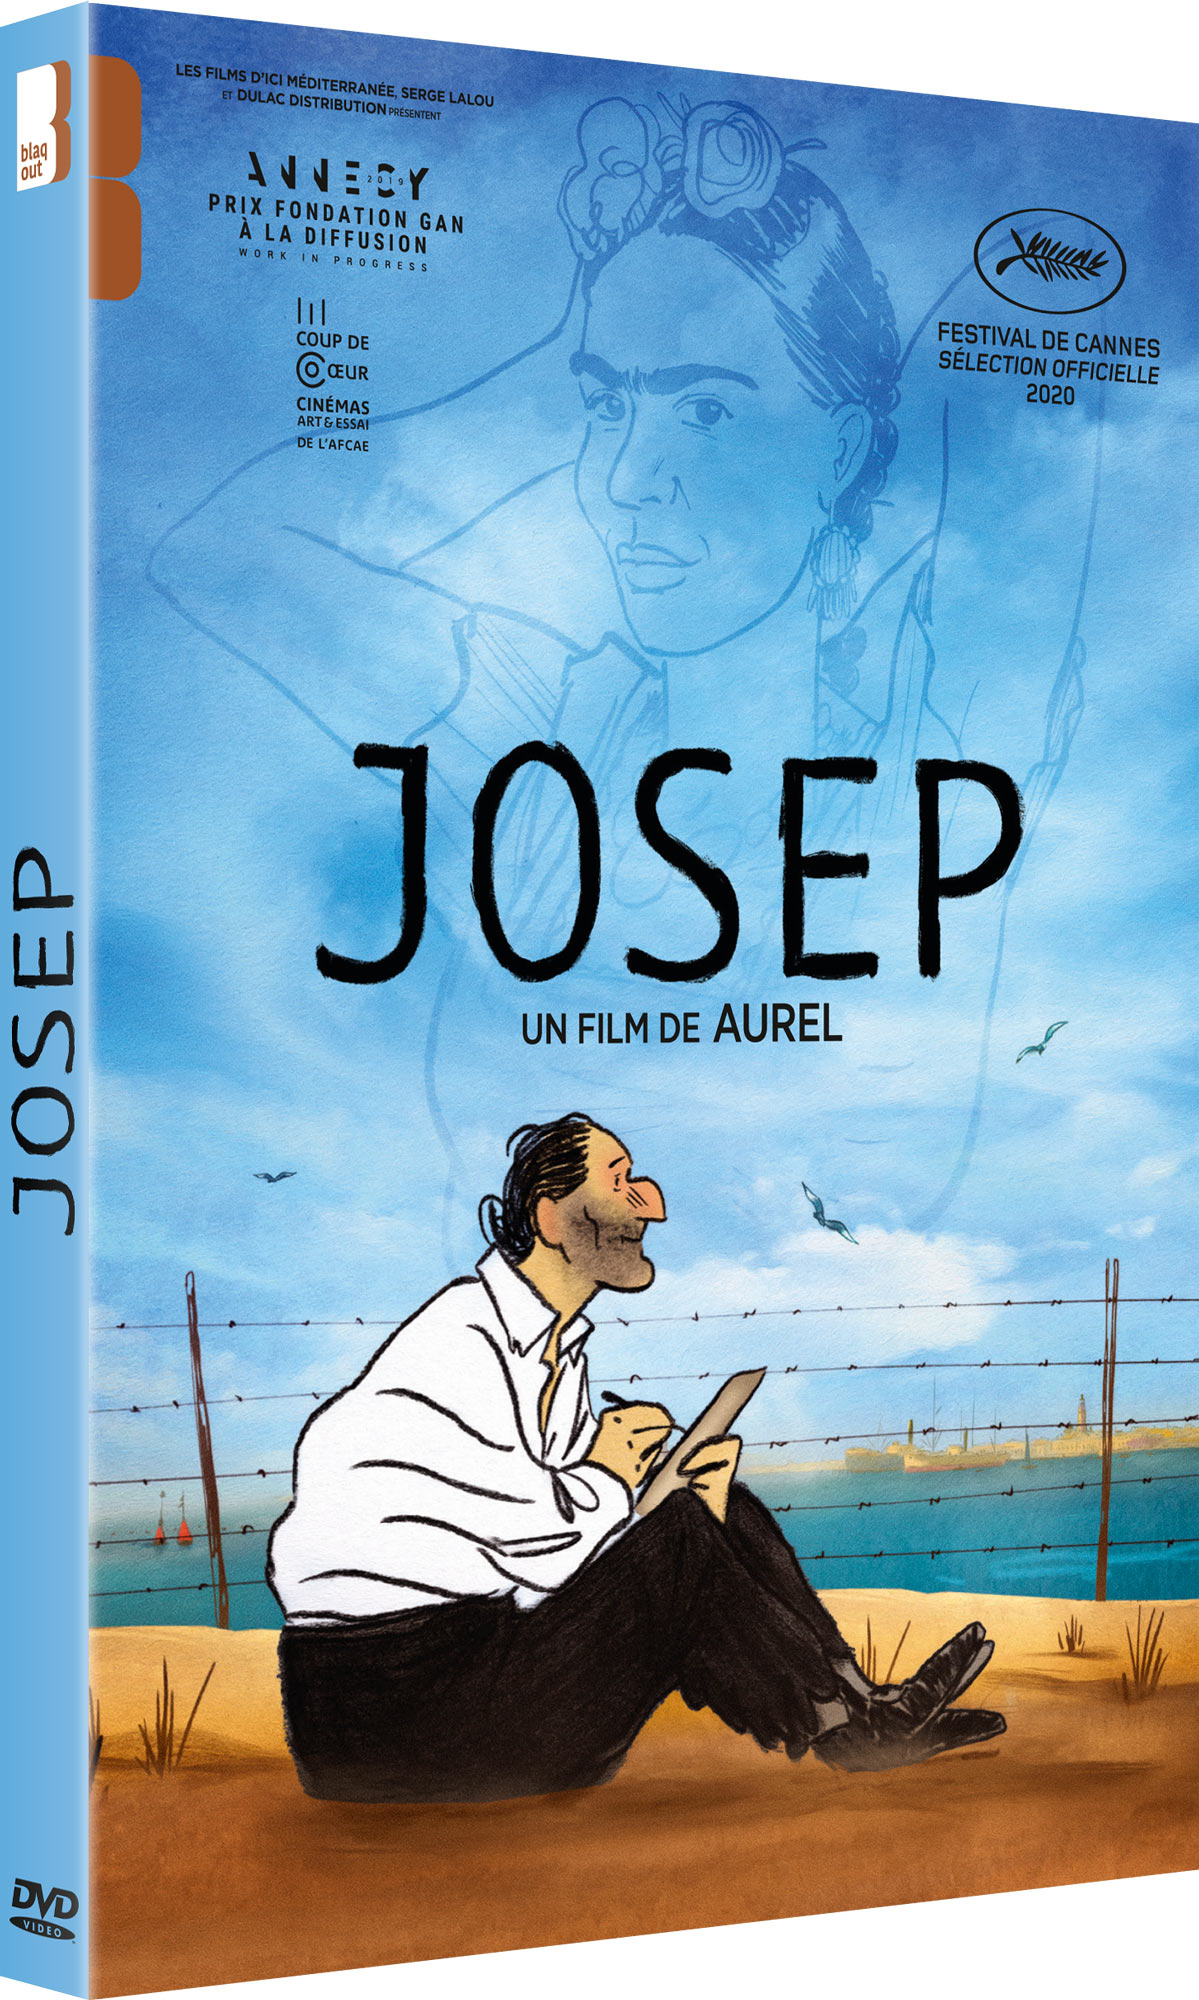 Josep - Blu-ray